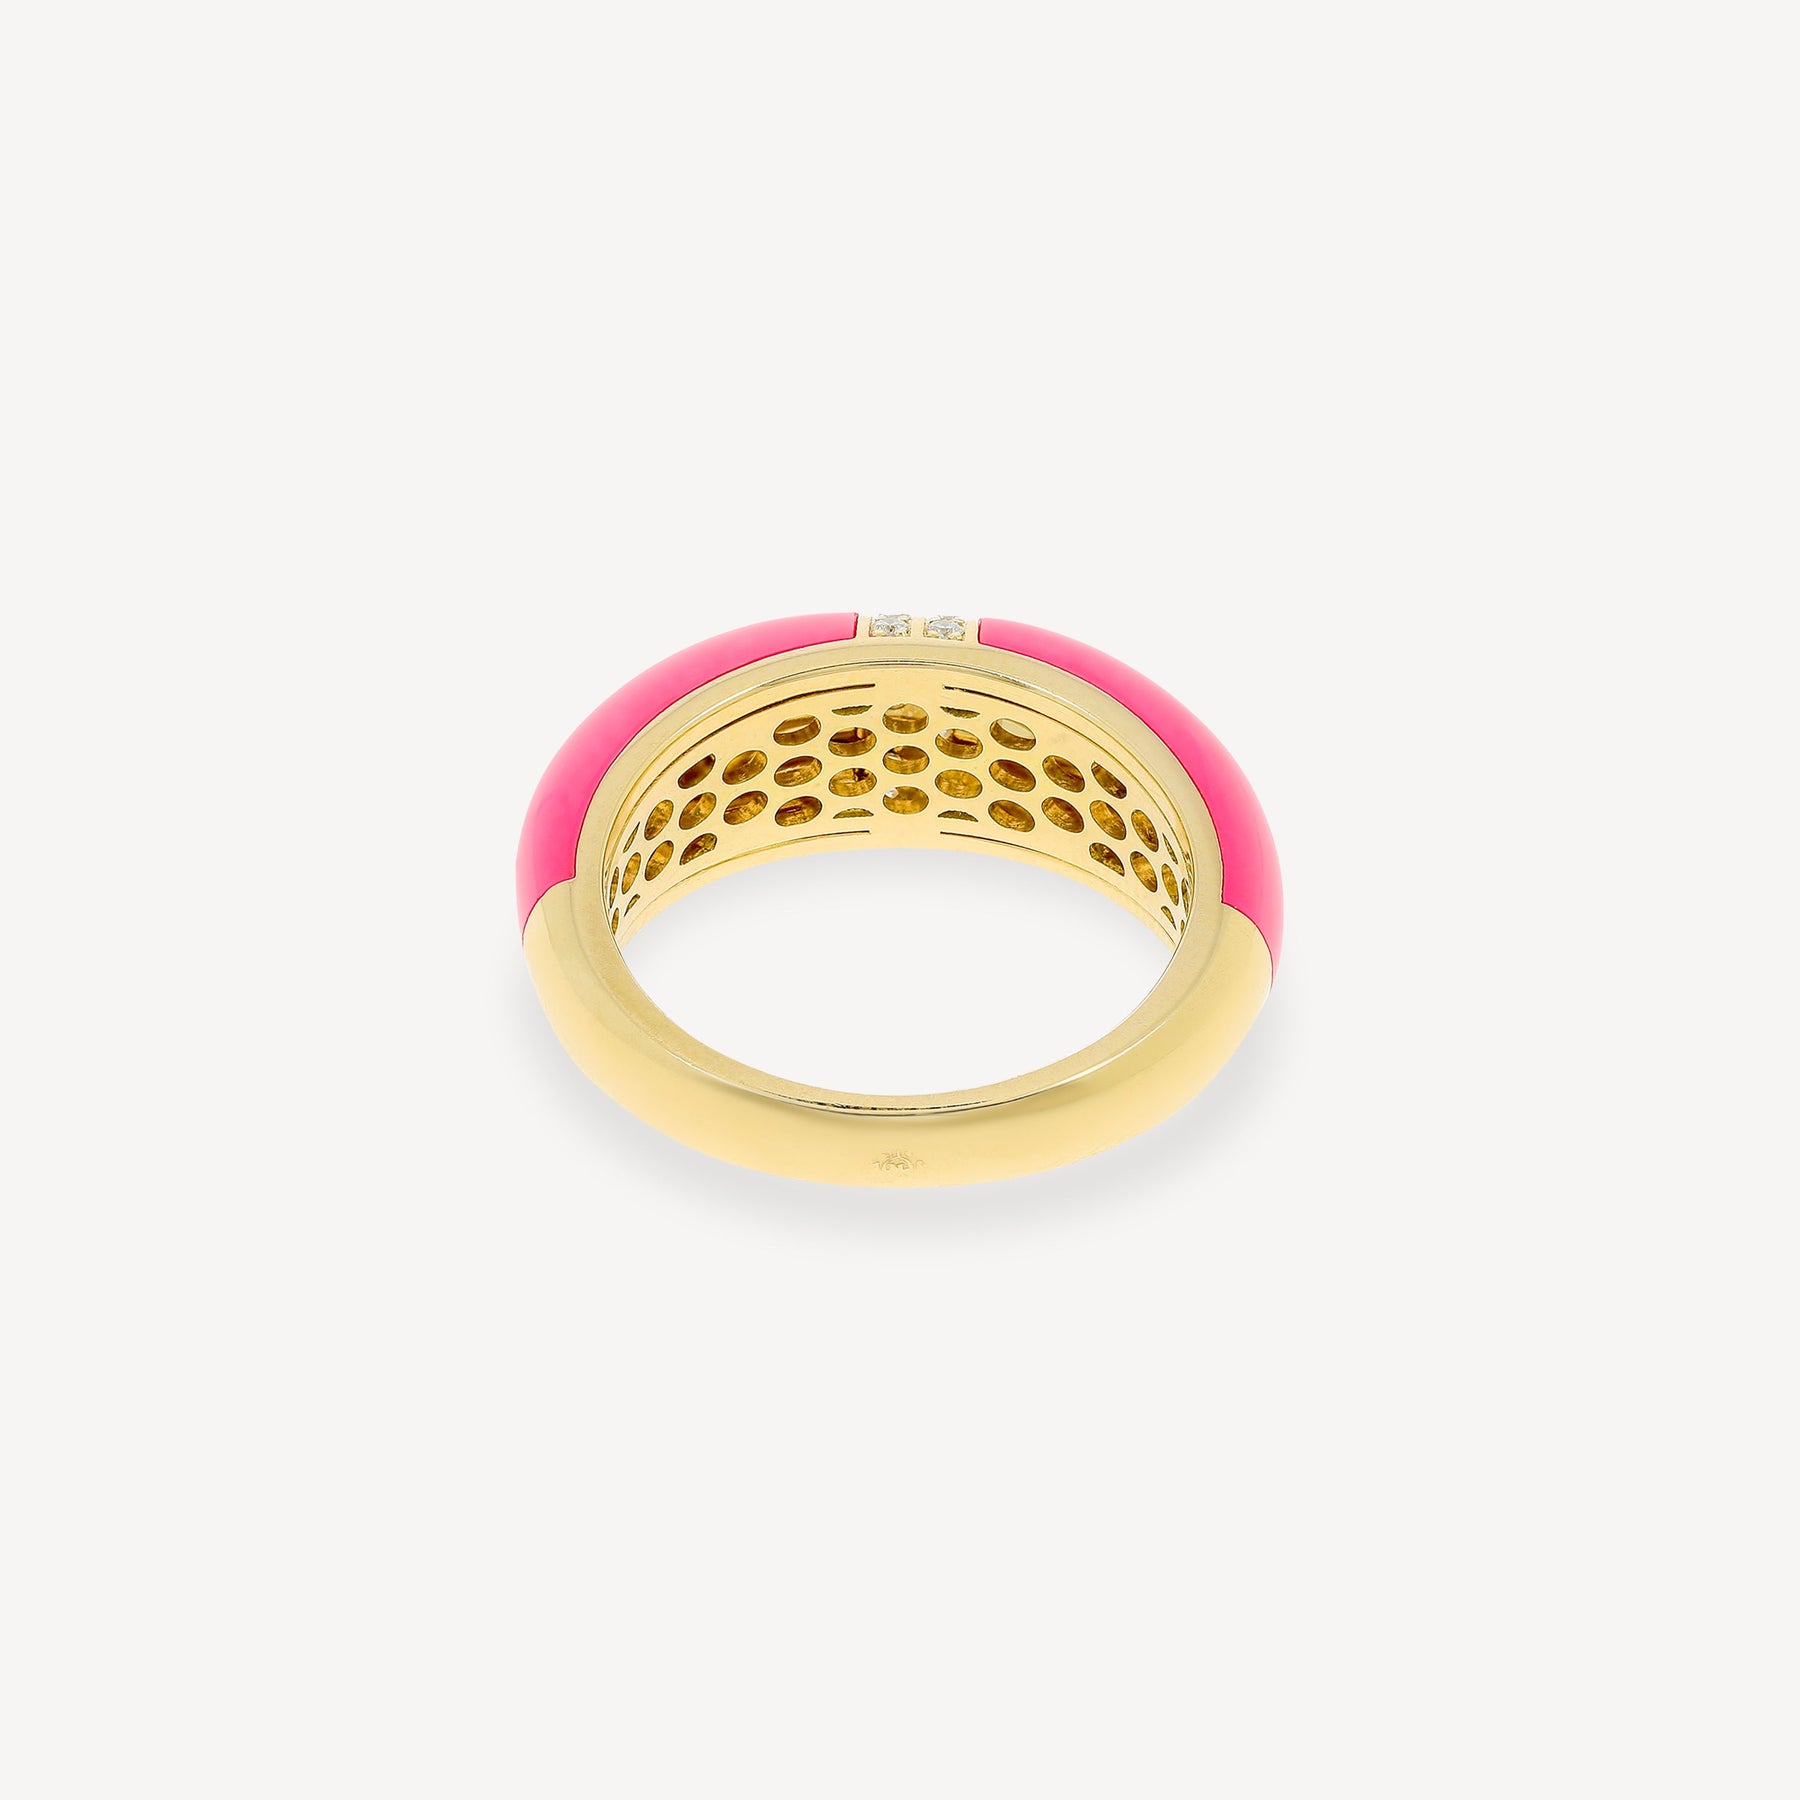 Modernity Pink Ring